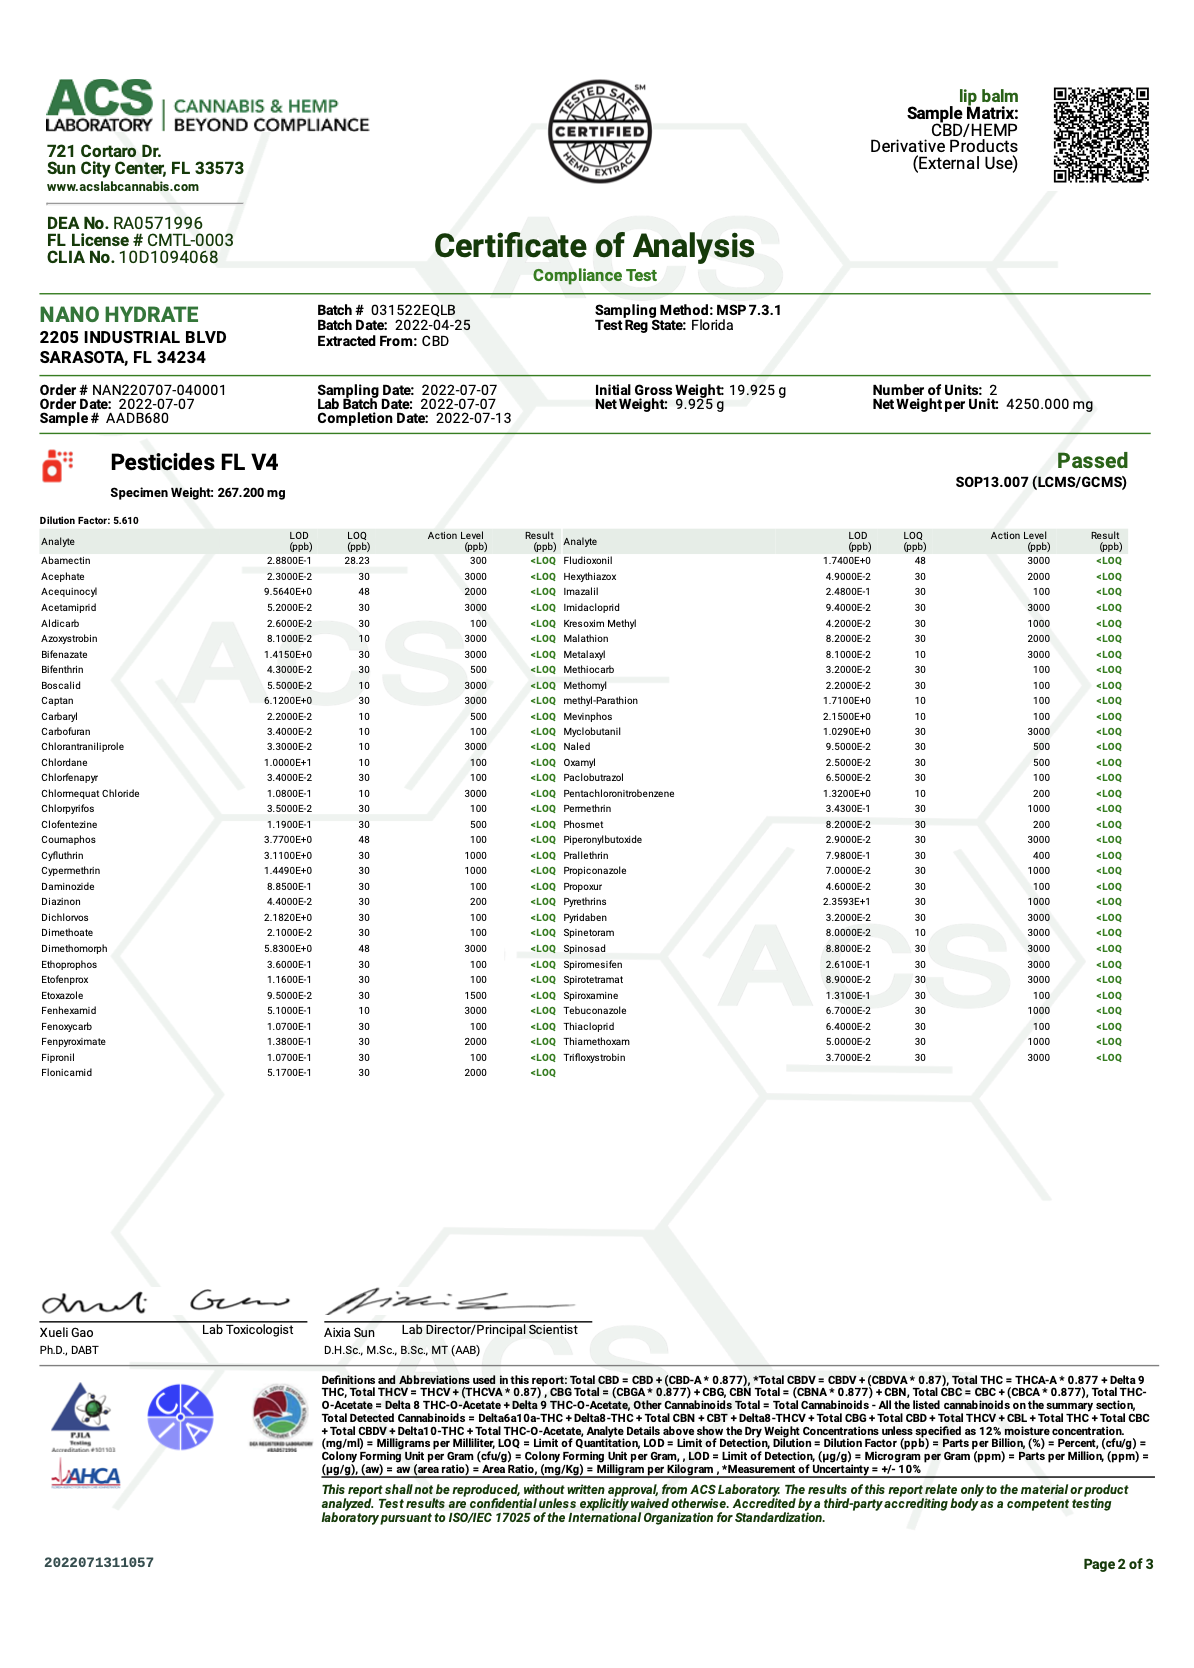 Certificate of Analysis for MRNG LLC Lip Balm THC free Hemp CBD Cosmetic Wellness Product